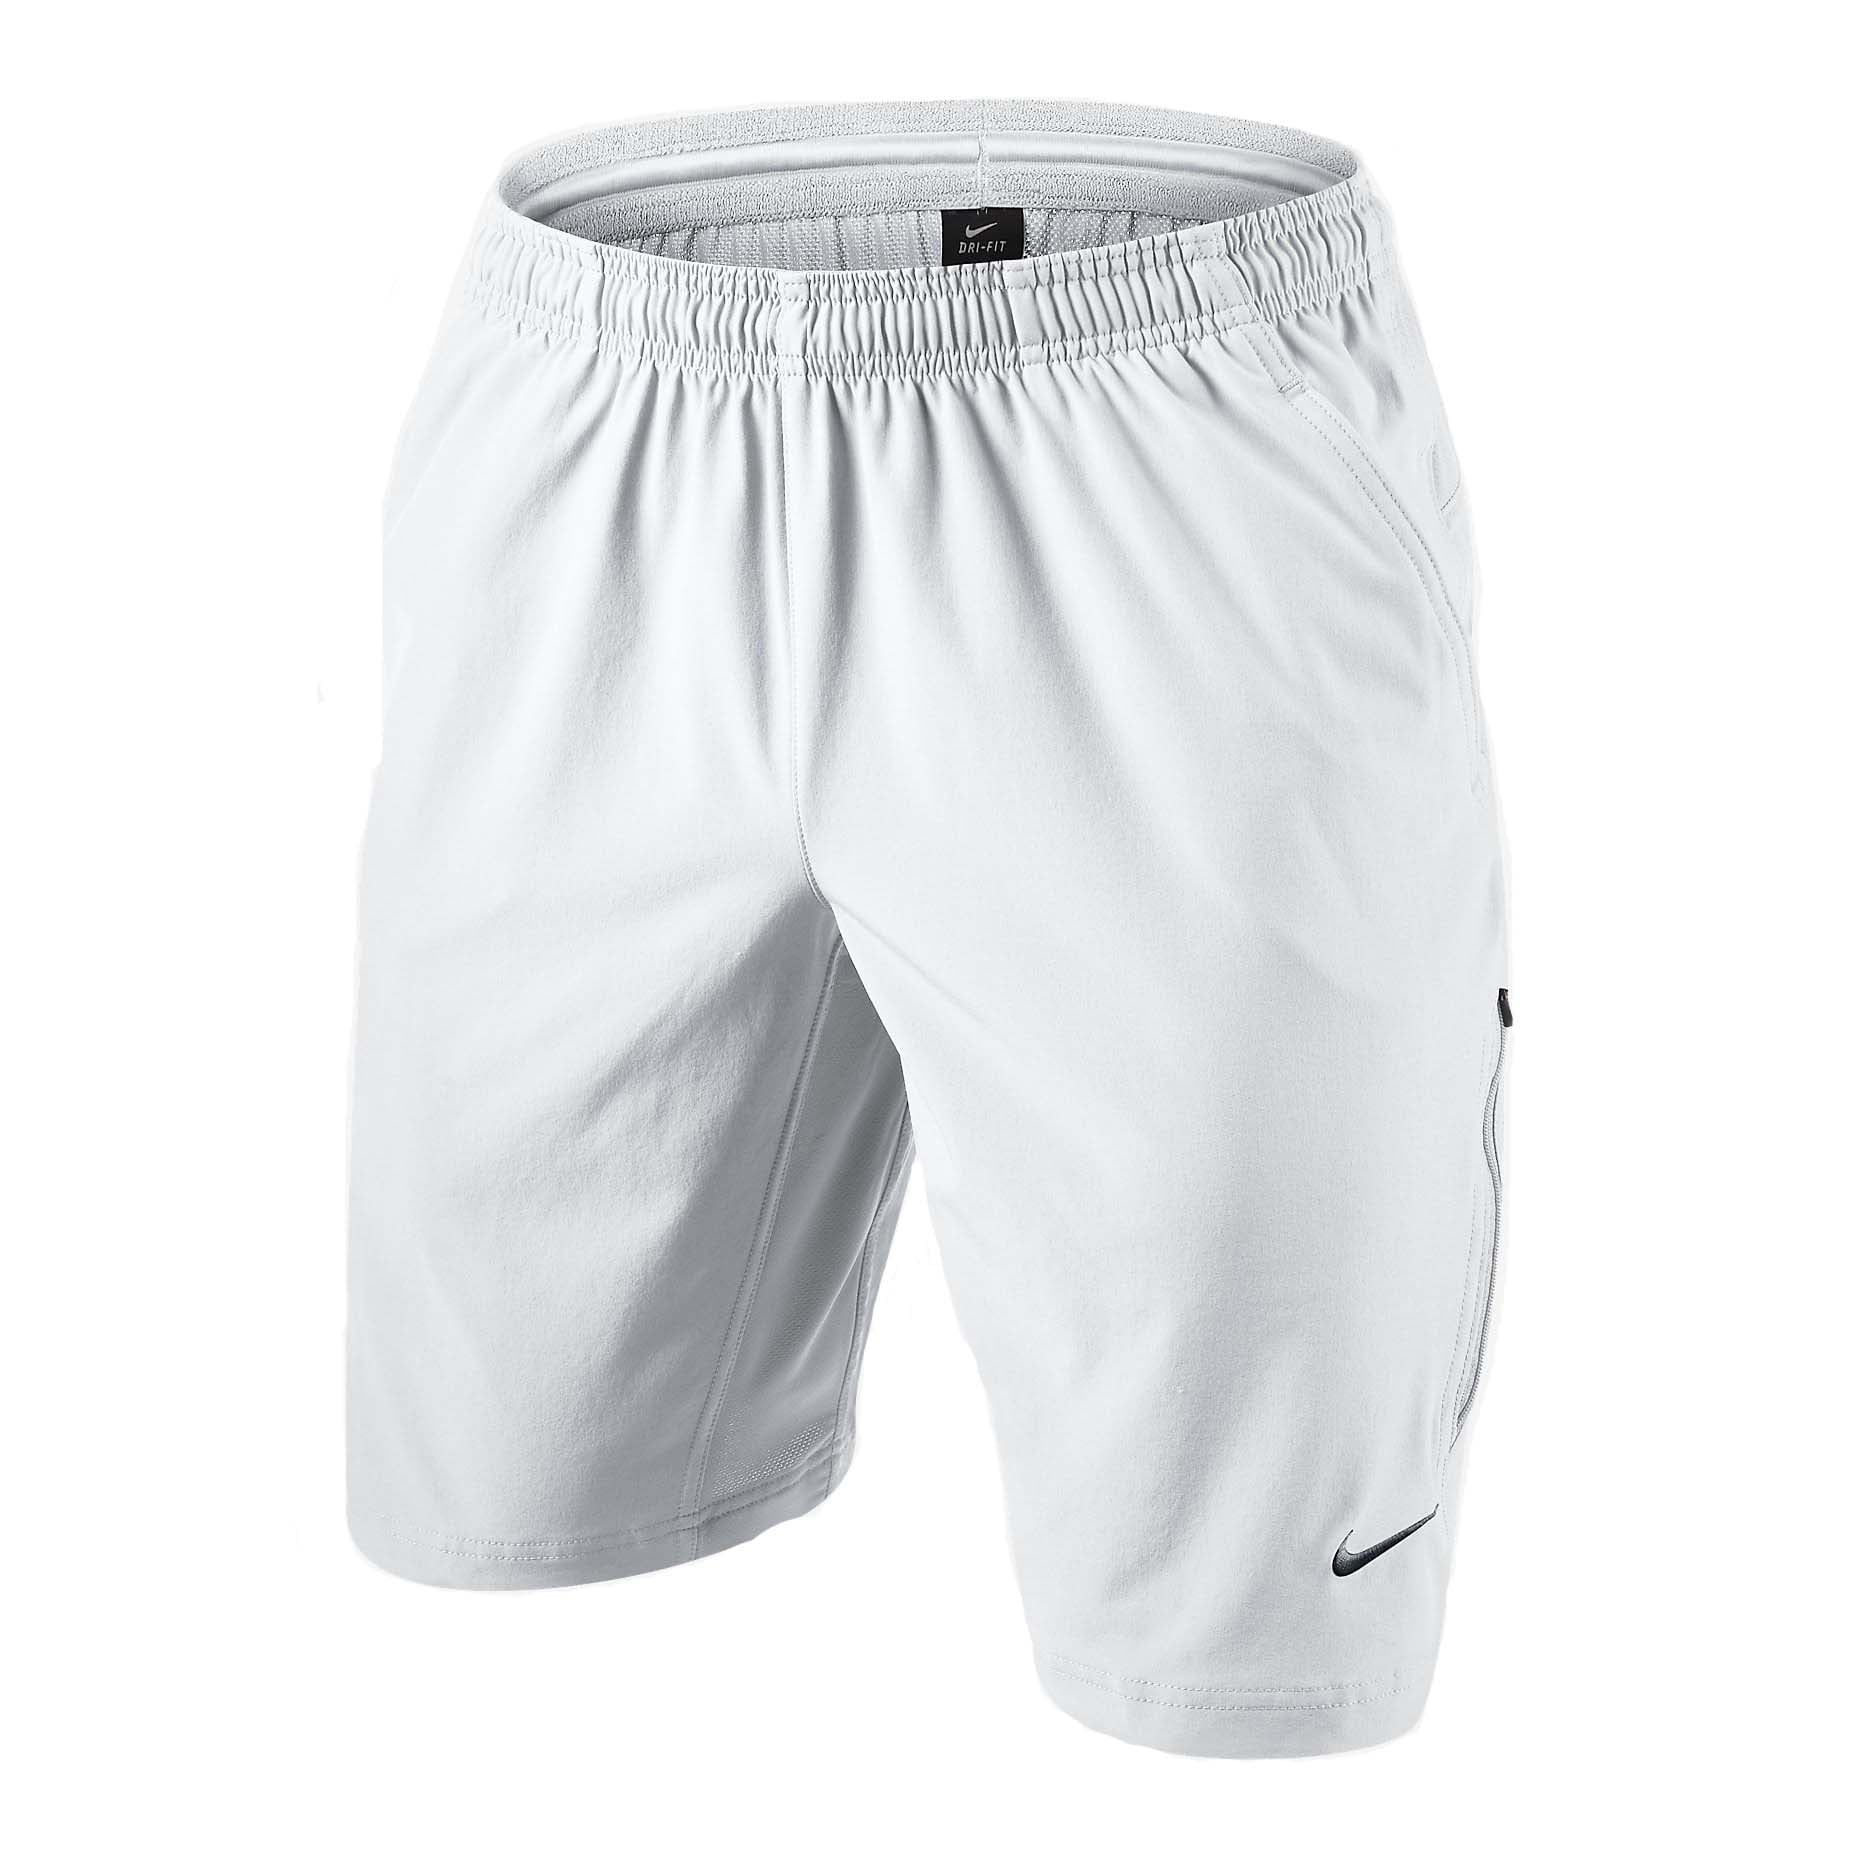 nike tennis shorts white